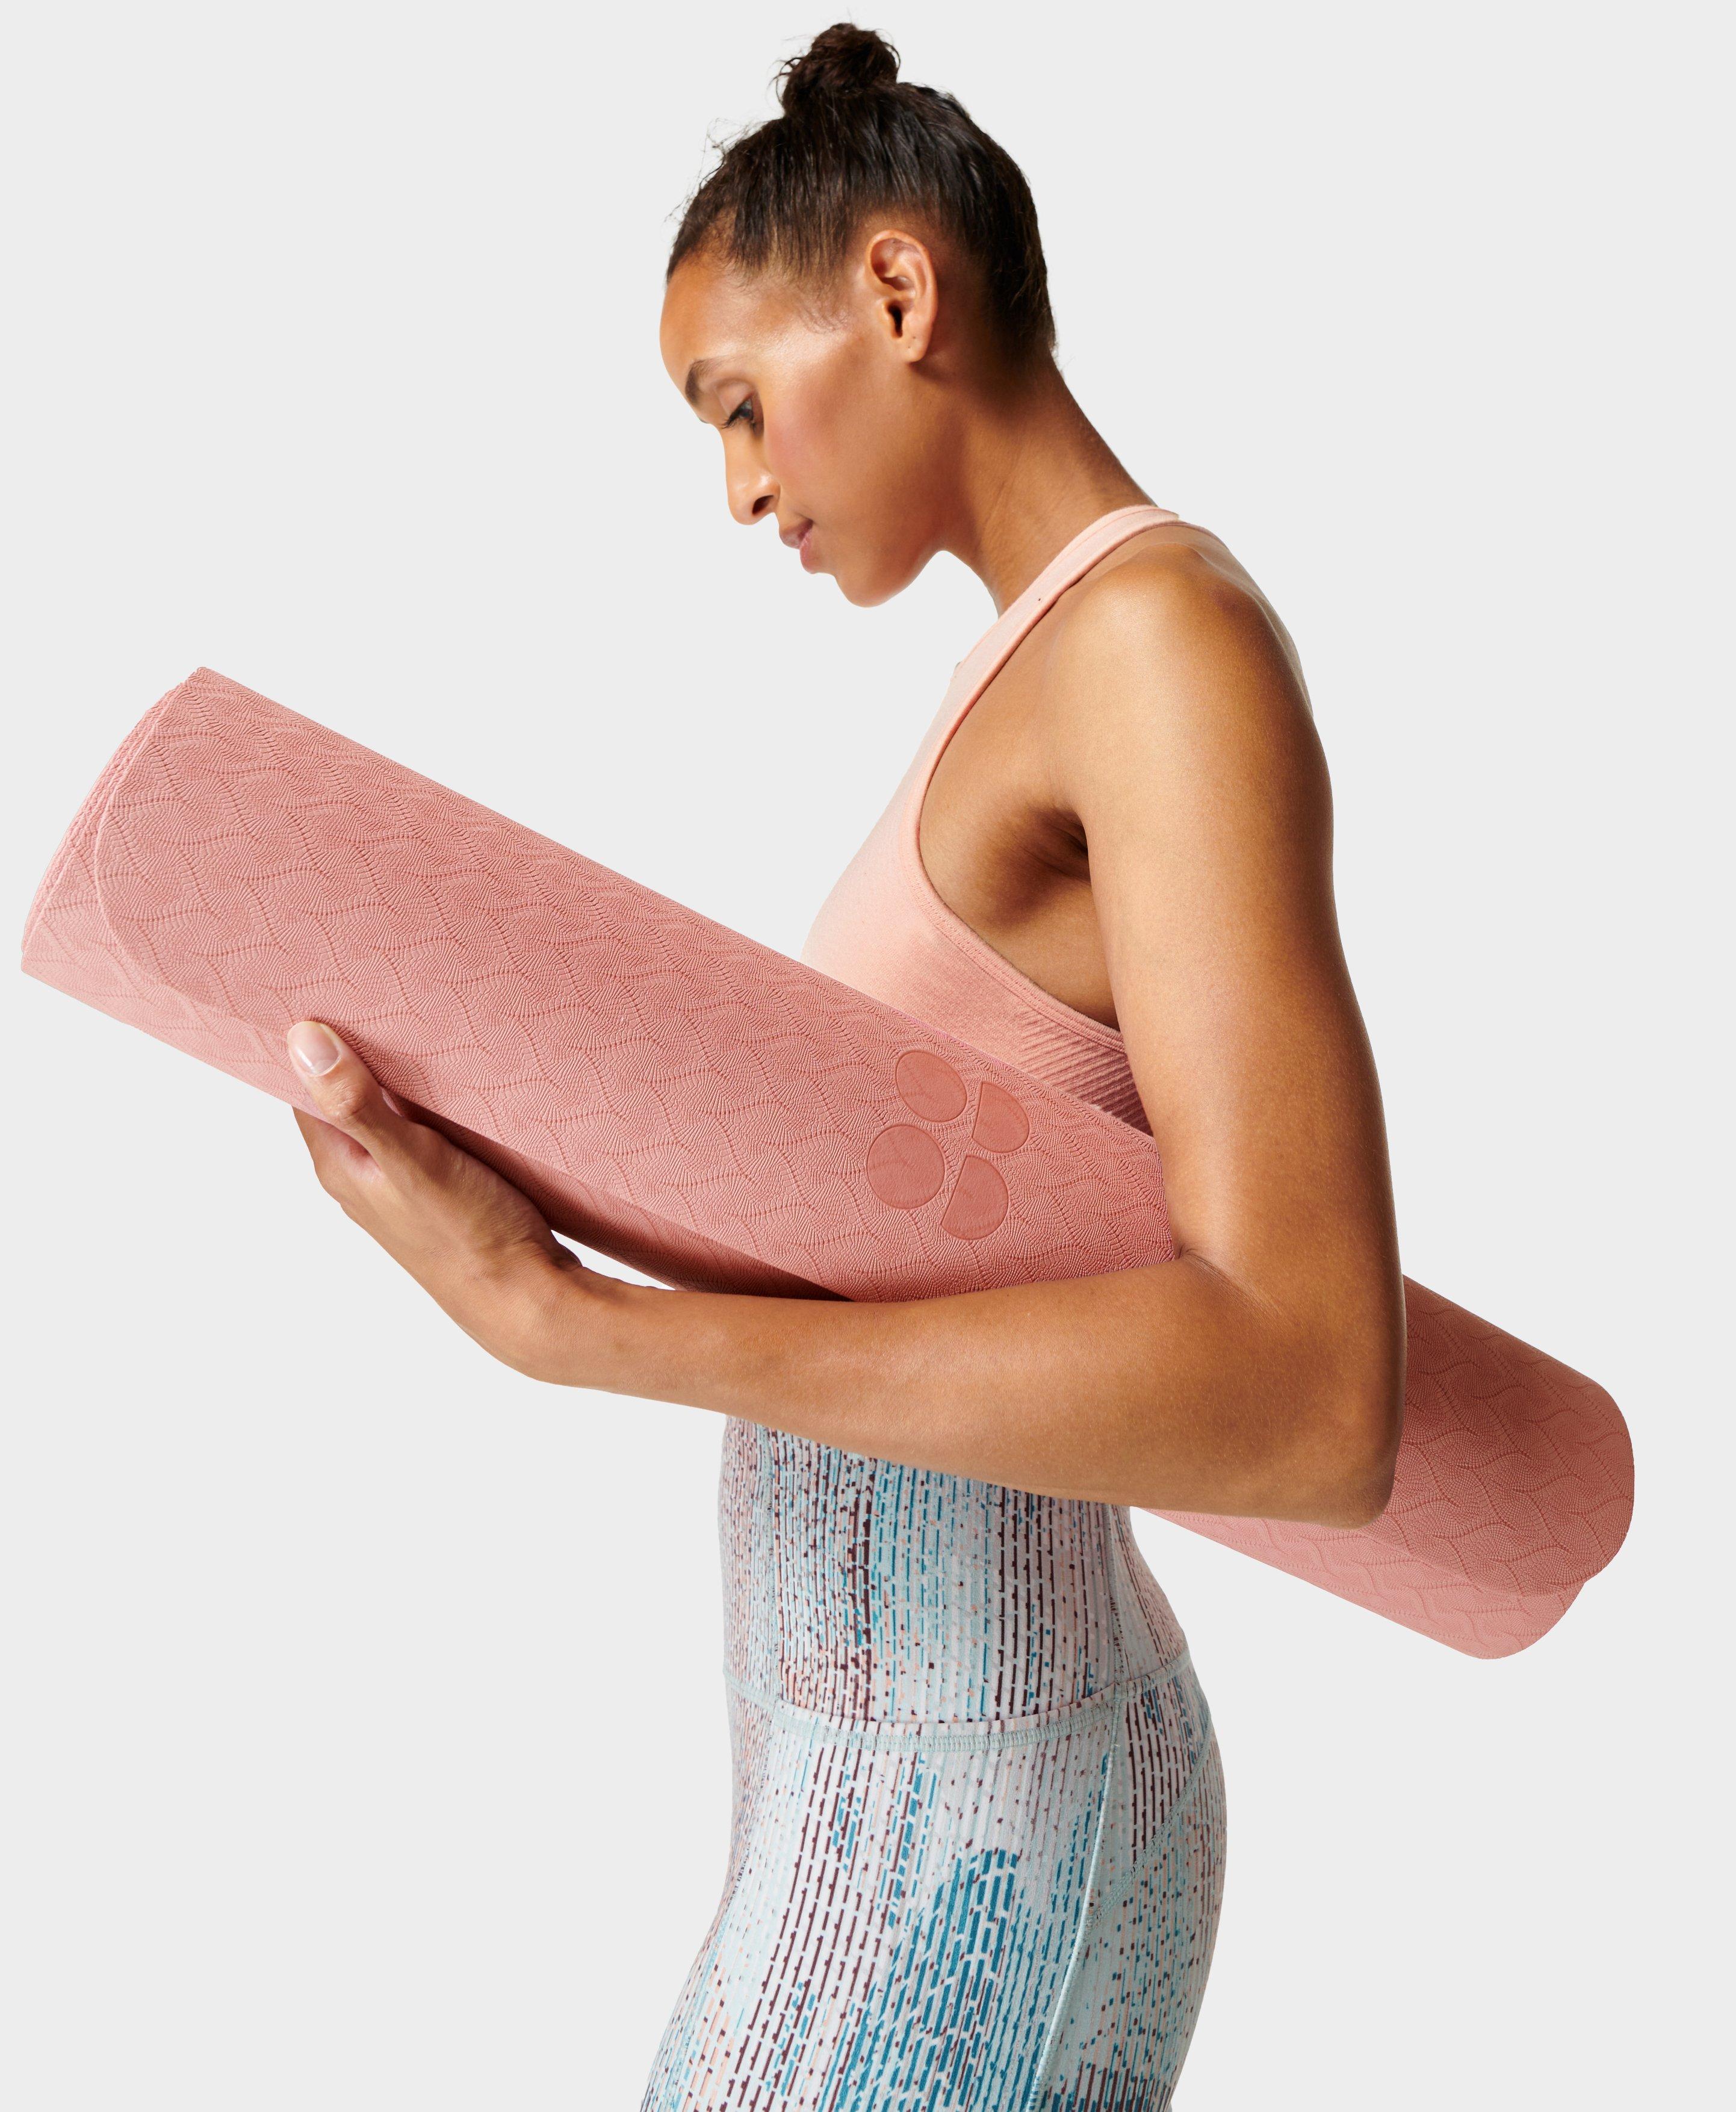 Yoga mat - ACCESSORIES - Woman 